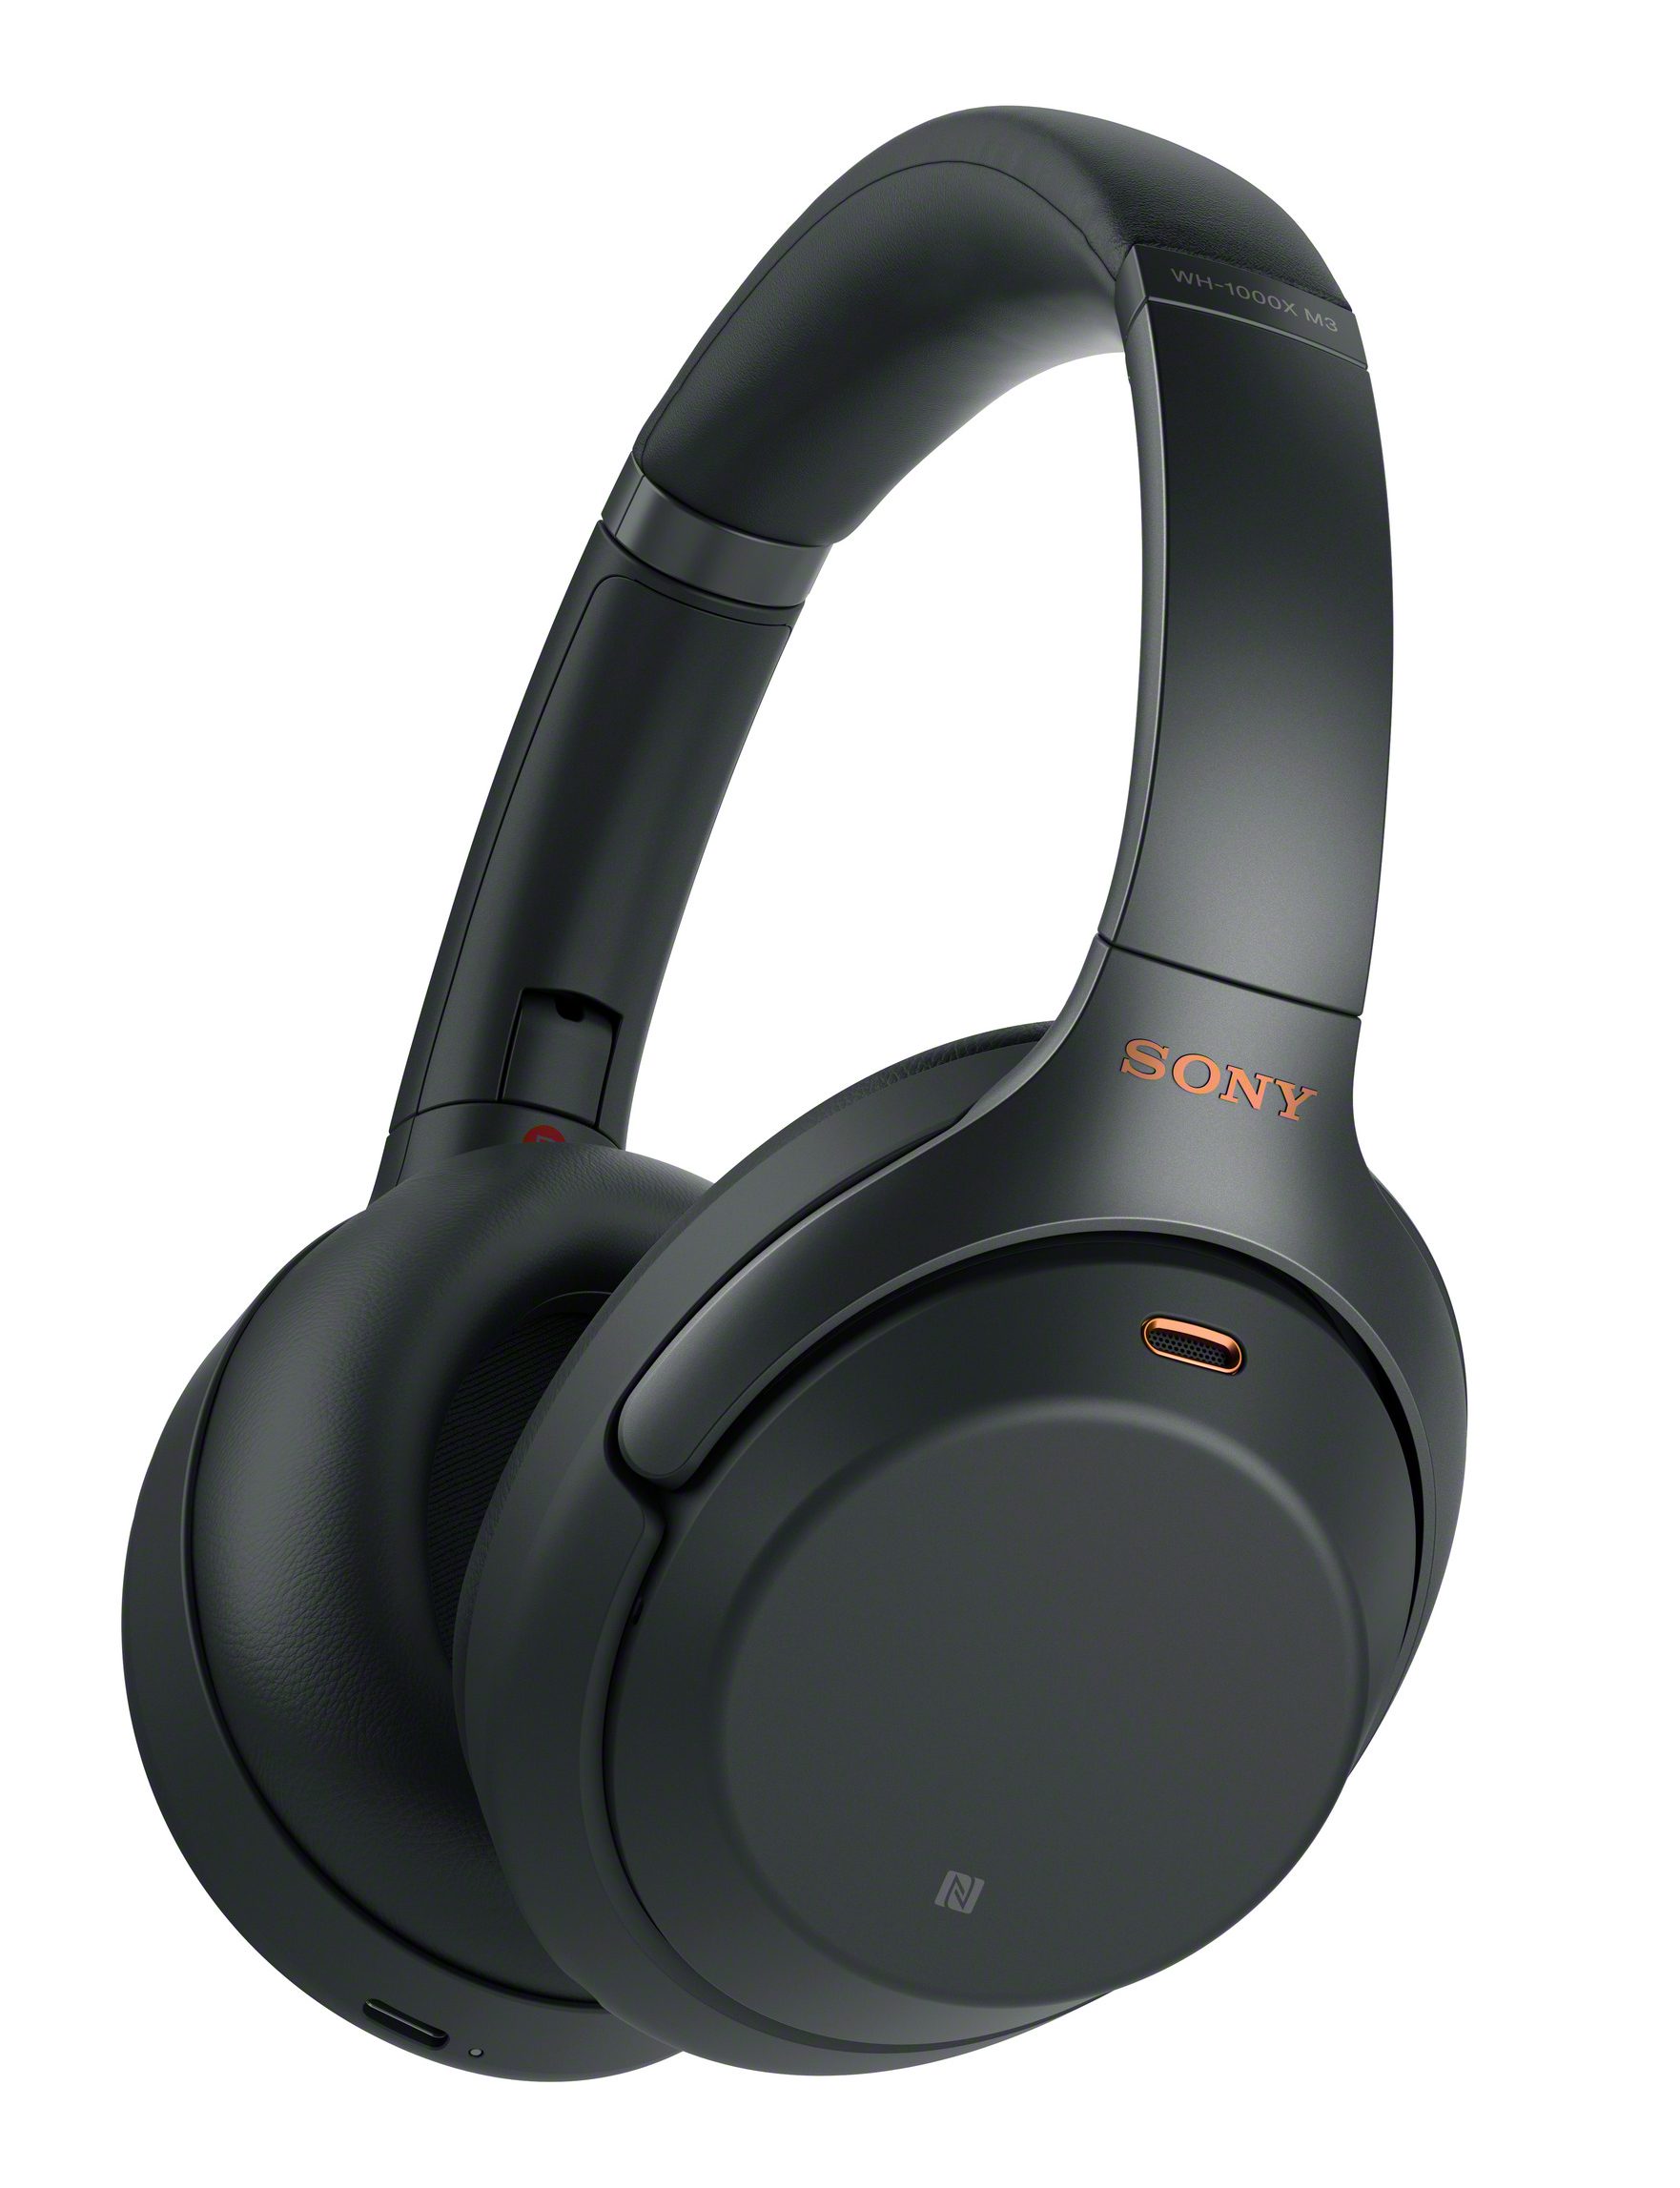 Sony Noise Canceling Headphones #sony #music #bestbuy #technology #ad